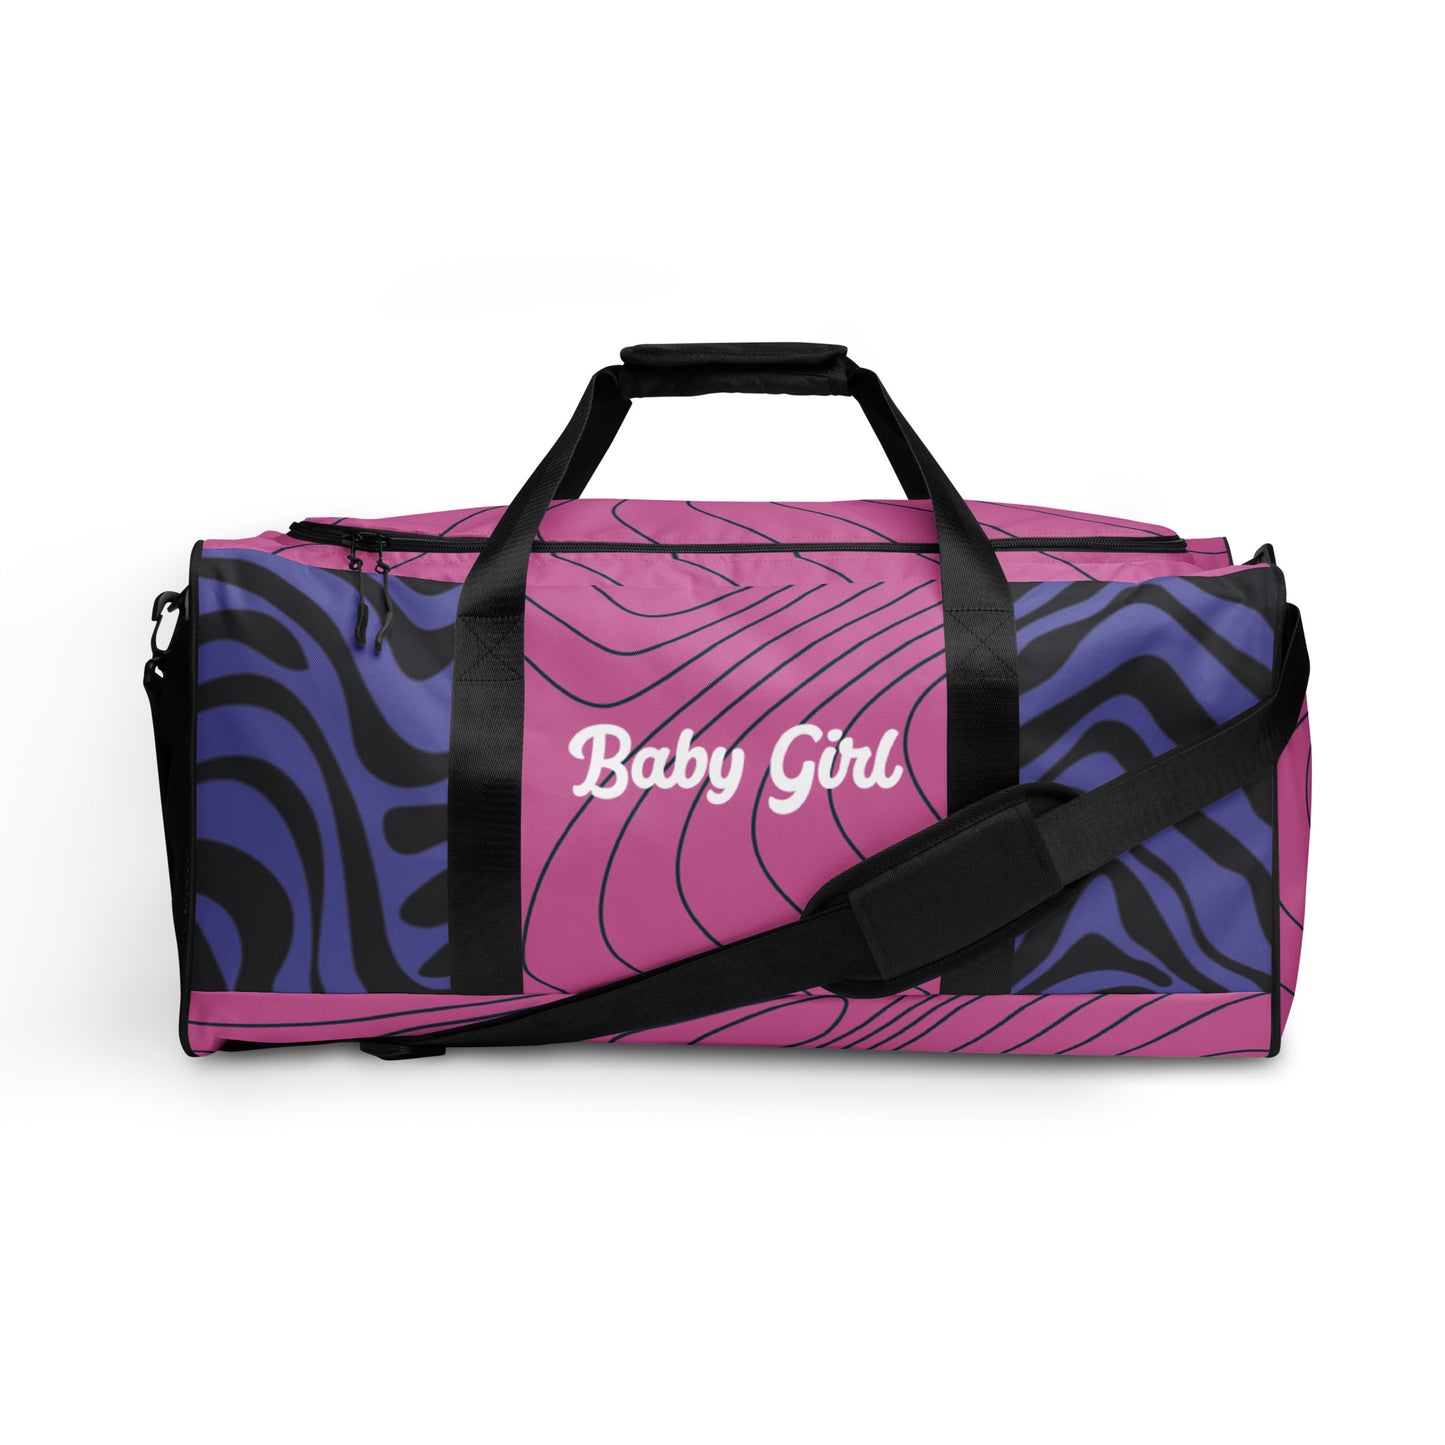 Babygirl-Duffle bag